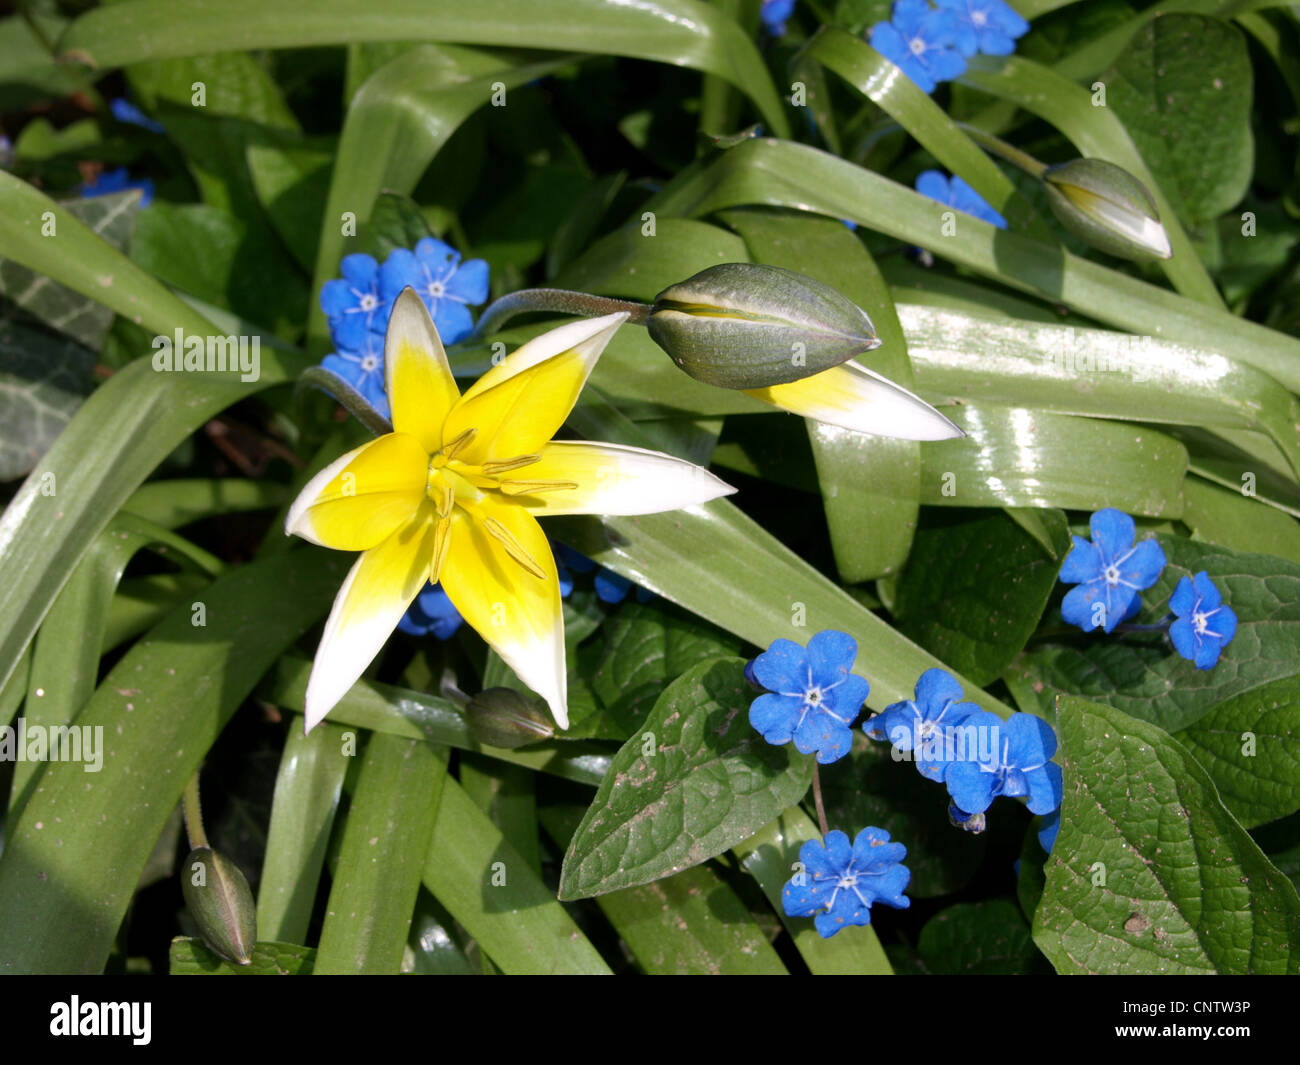 late tulip, tarda tulip and forget me not / Tulpia tarda, Brunnera macrophylla Stock Photo